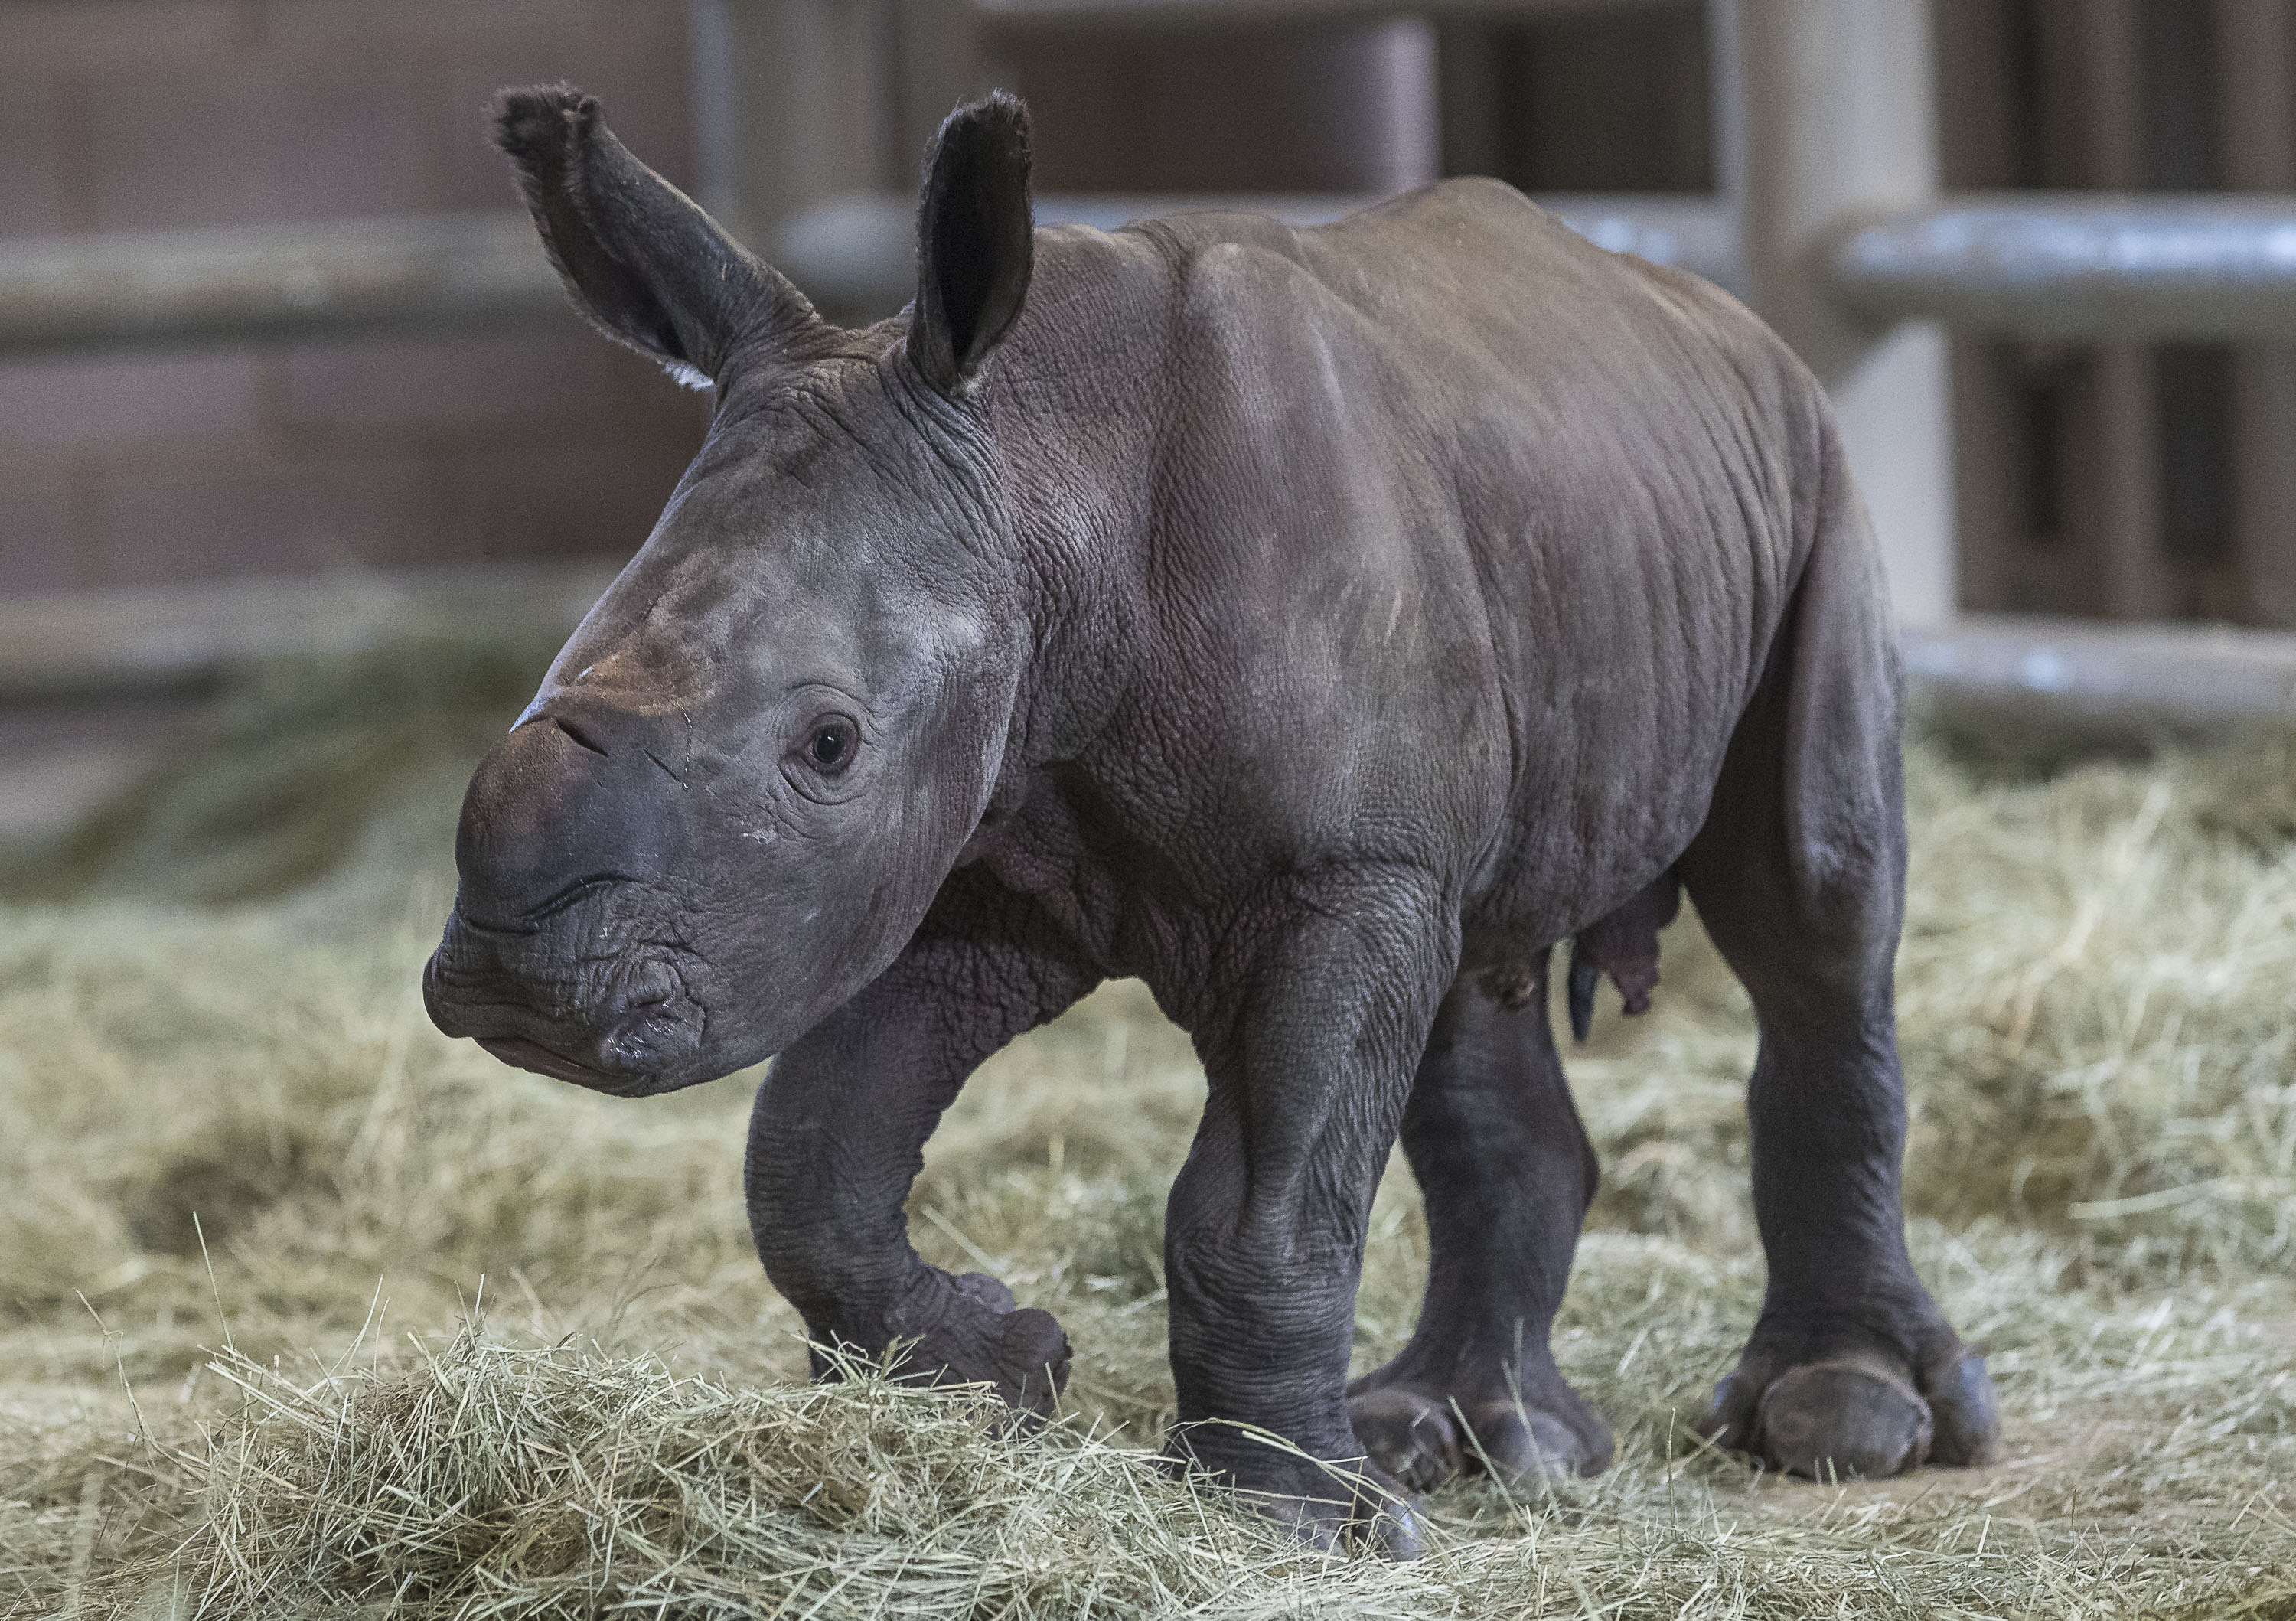 The rhino calf